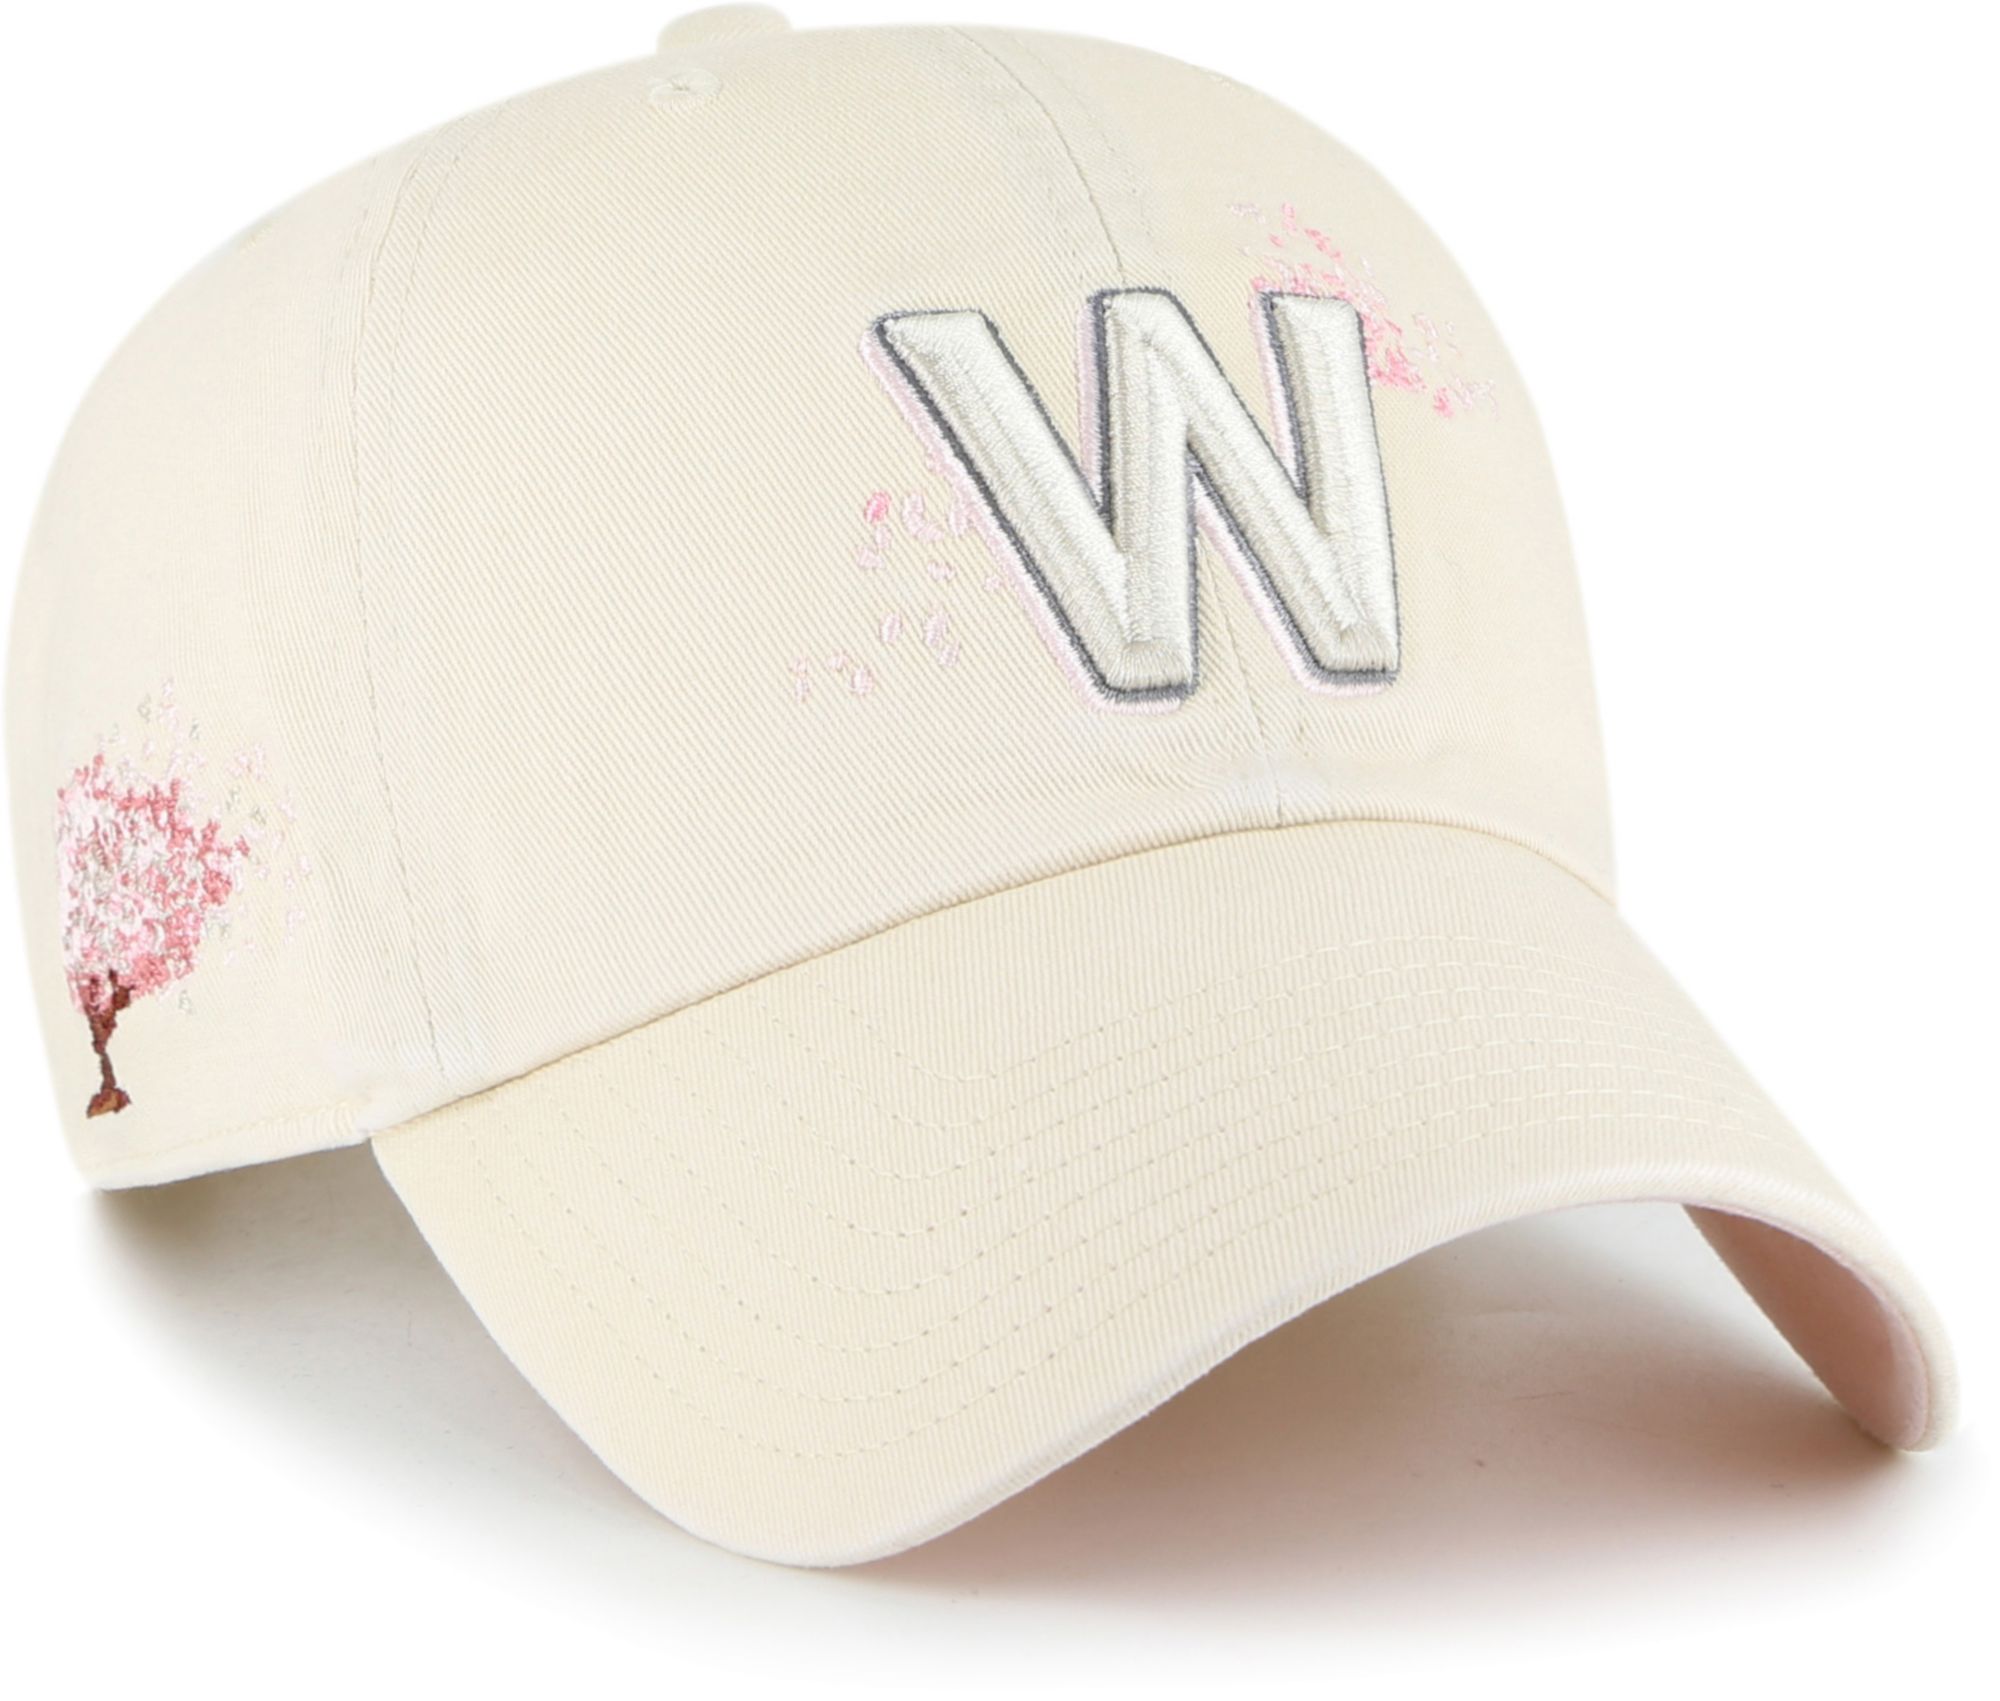 washington nationals city connect hat